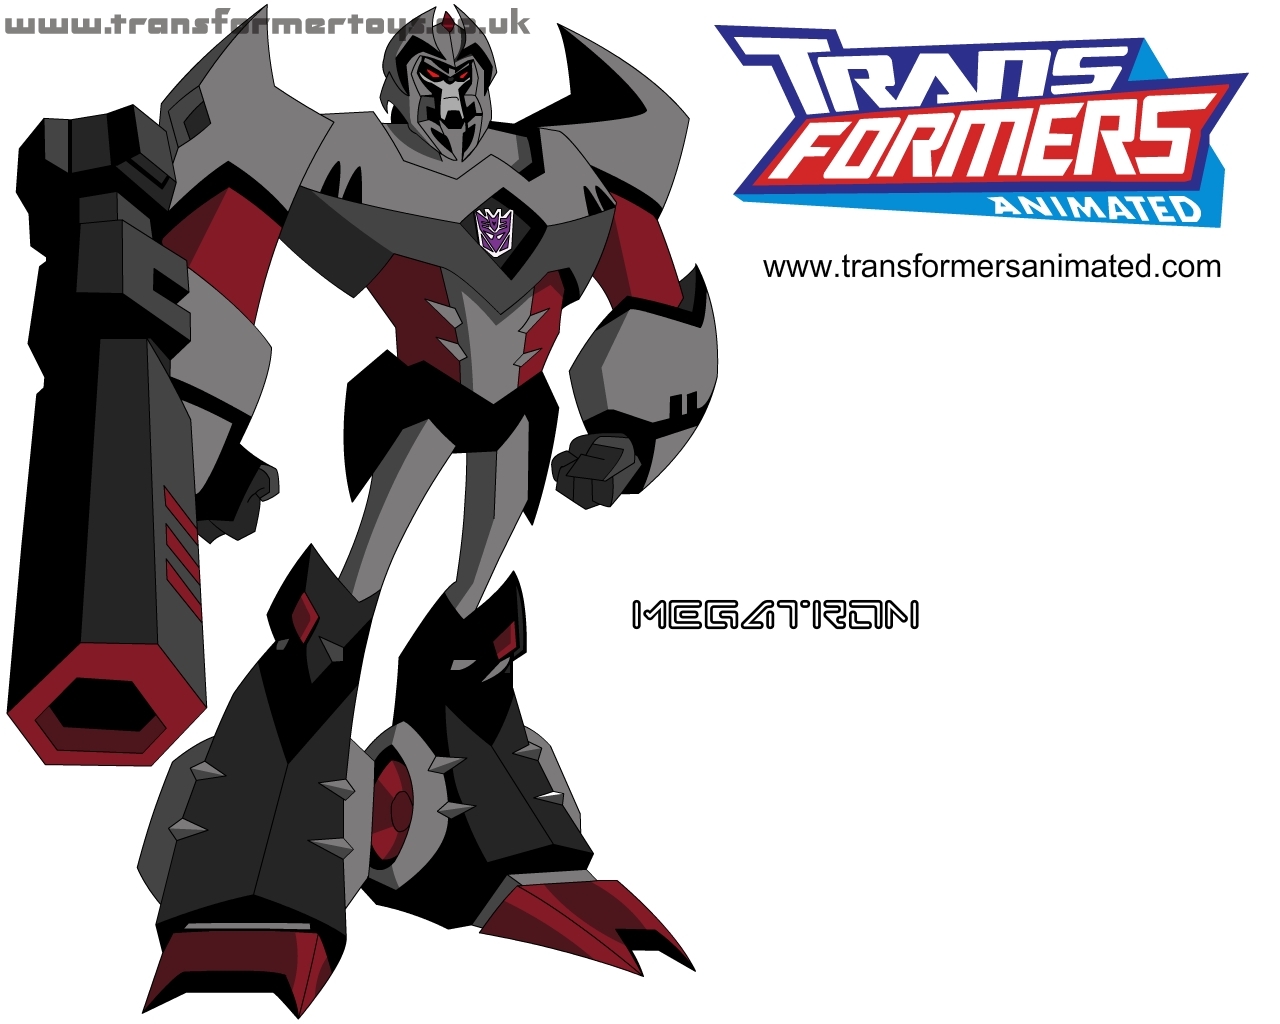 Transformers Animated Wallpaper At TransformersAnimated.com